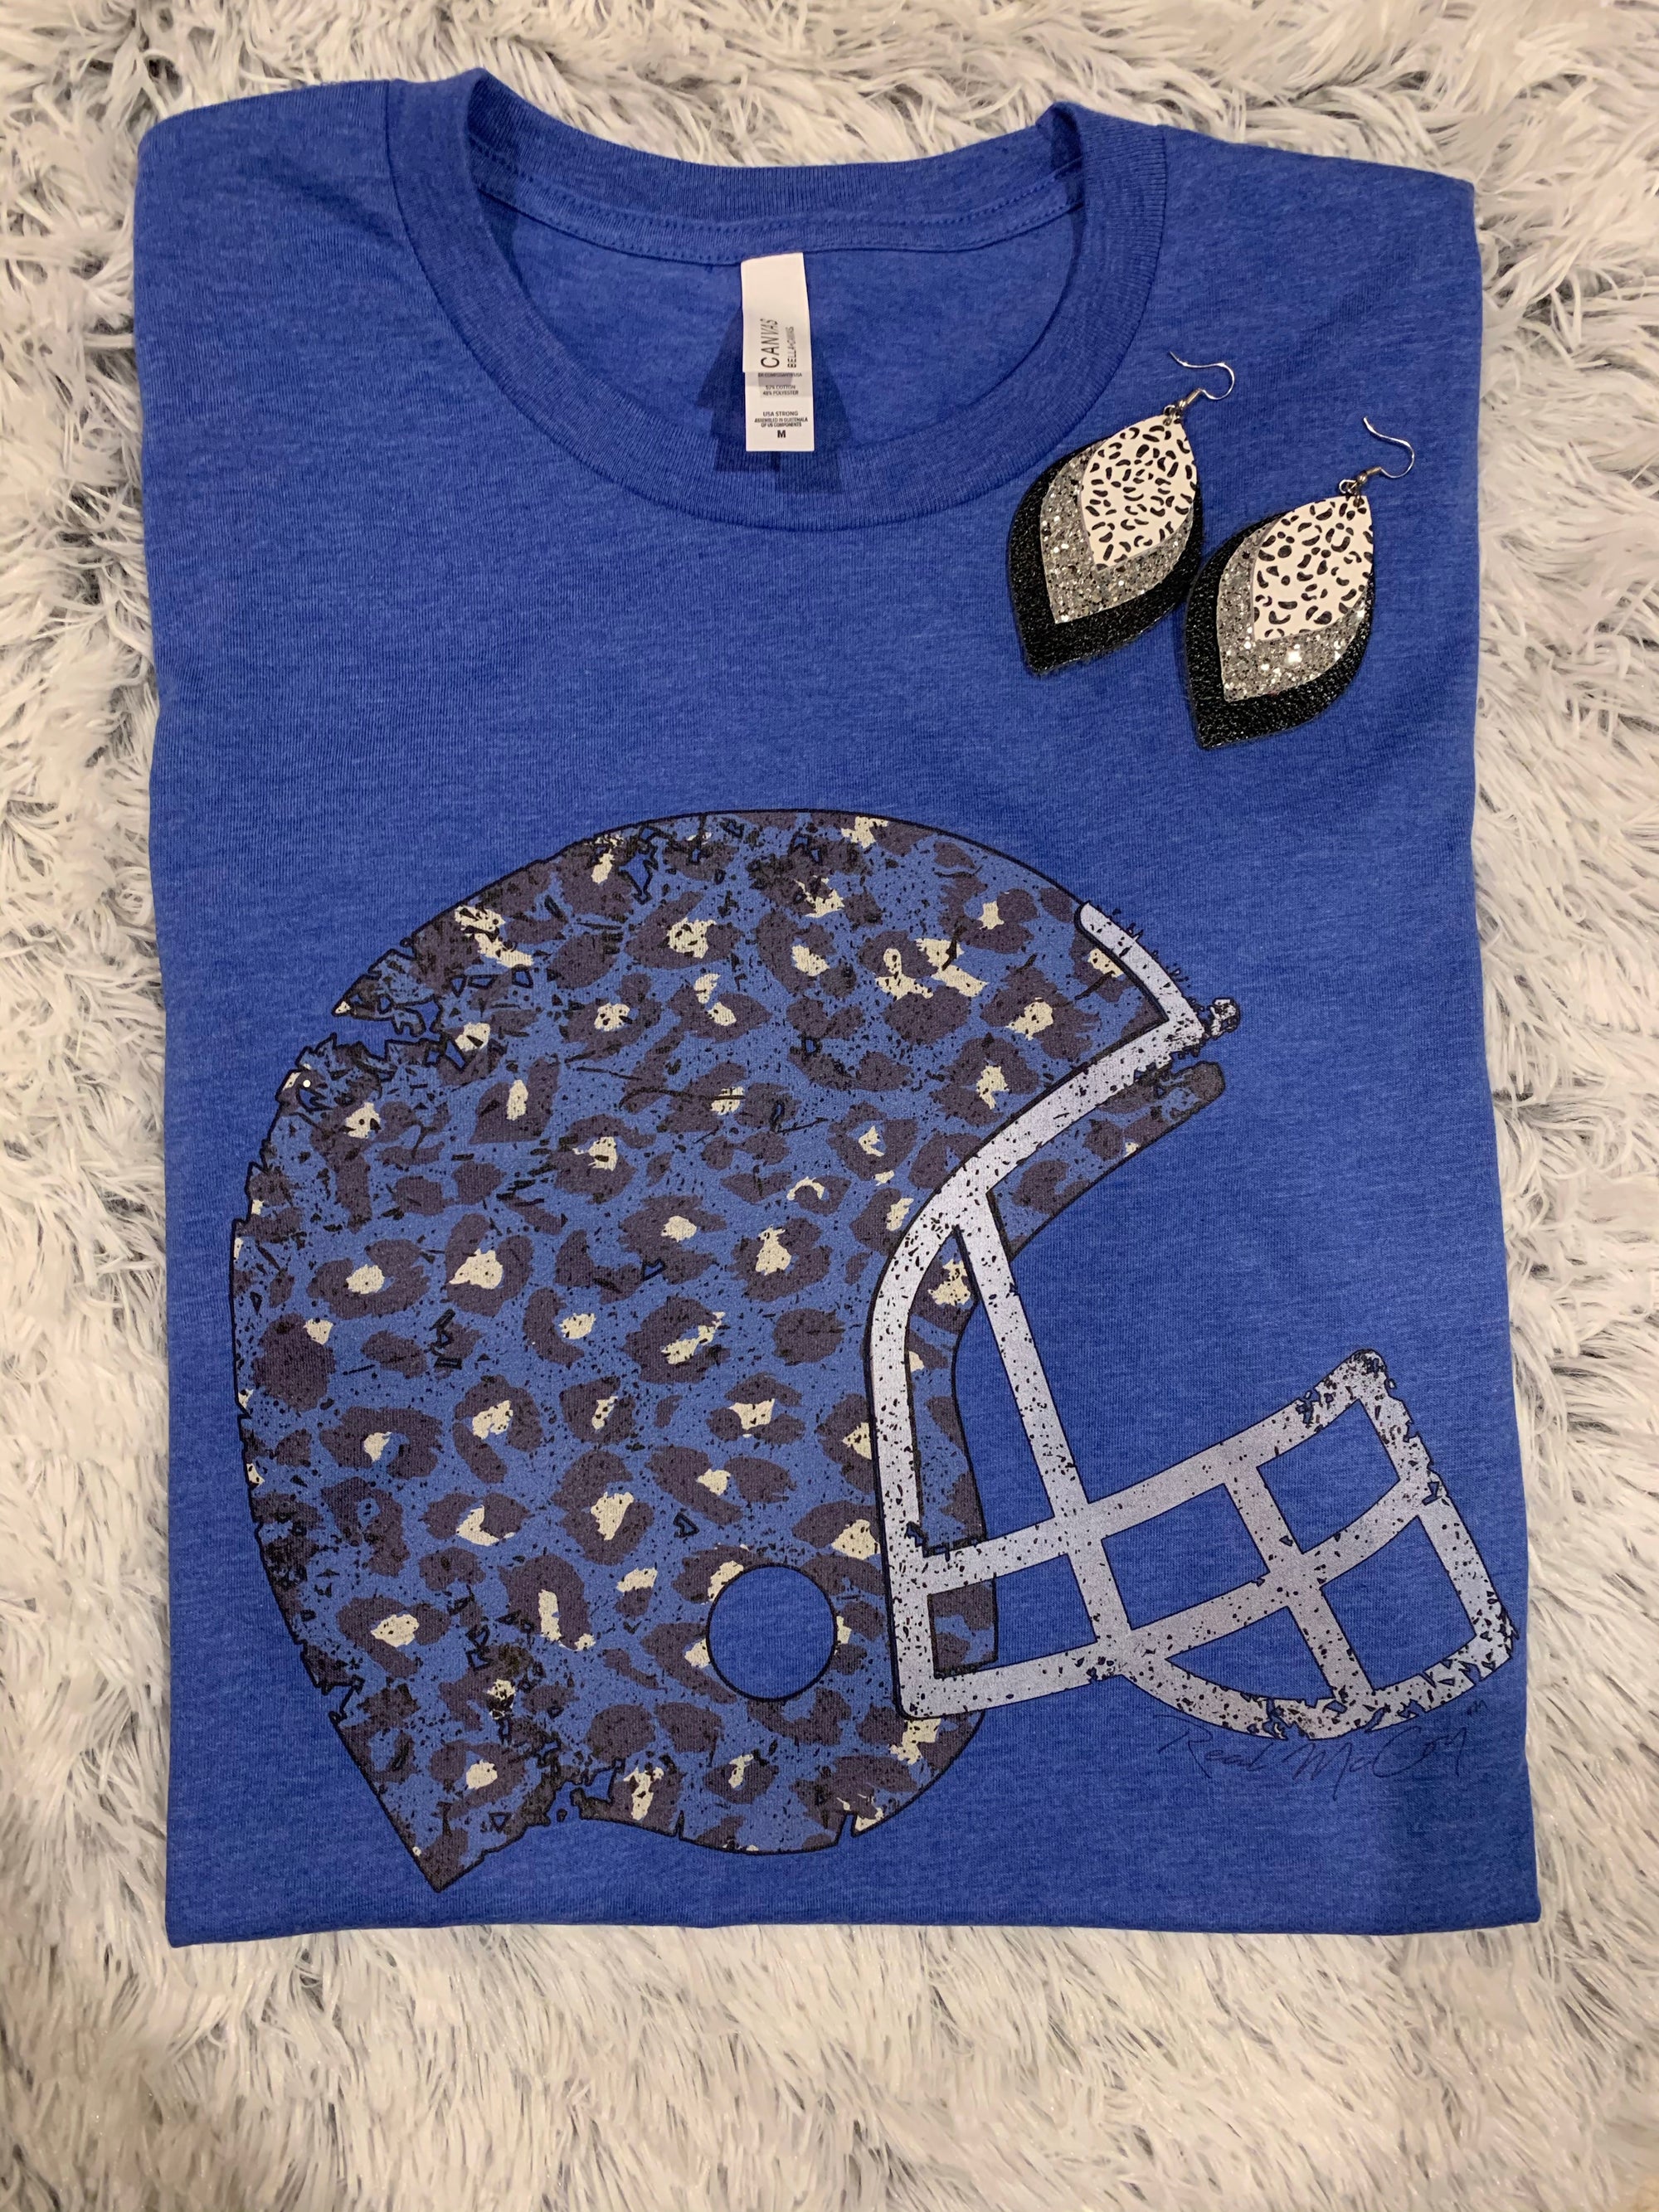 Blue leopard football 🏈 helmet